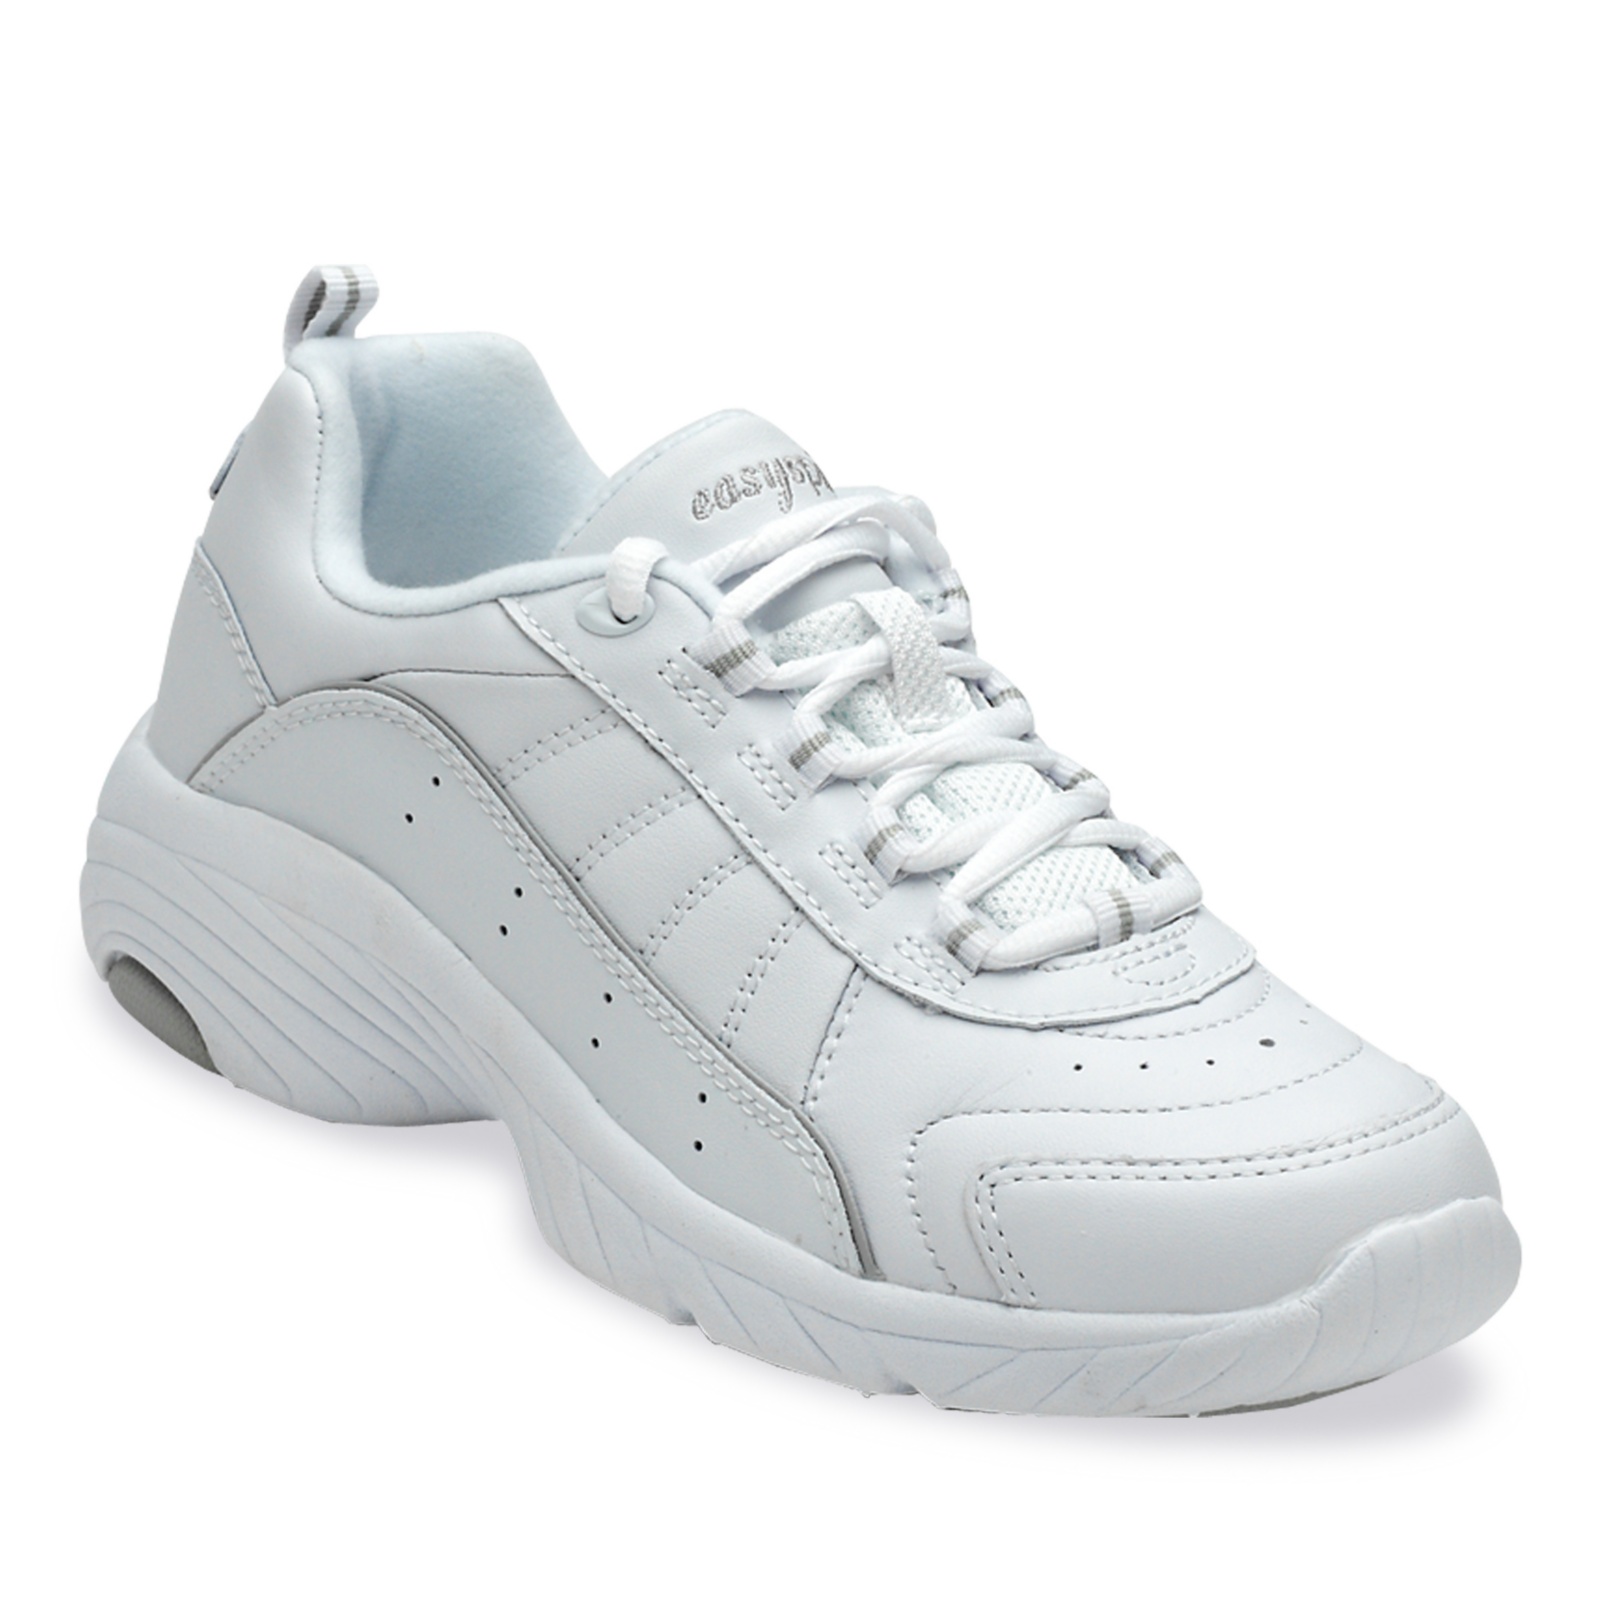 Easy Spirit Women'S Punter Walking Shoes White Light Grey 6 M B M | eBay